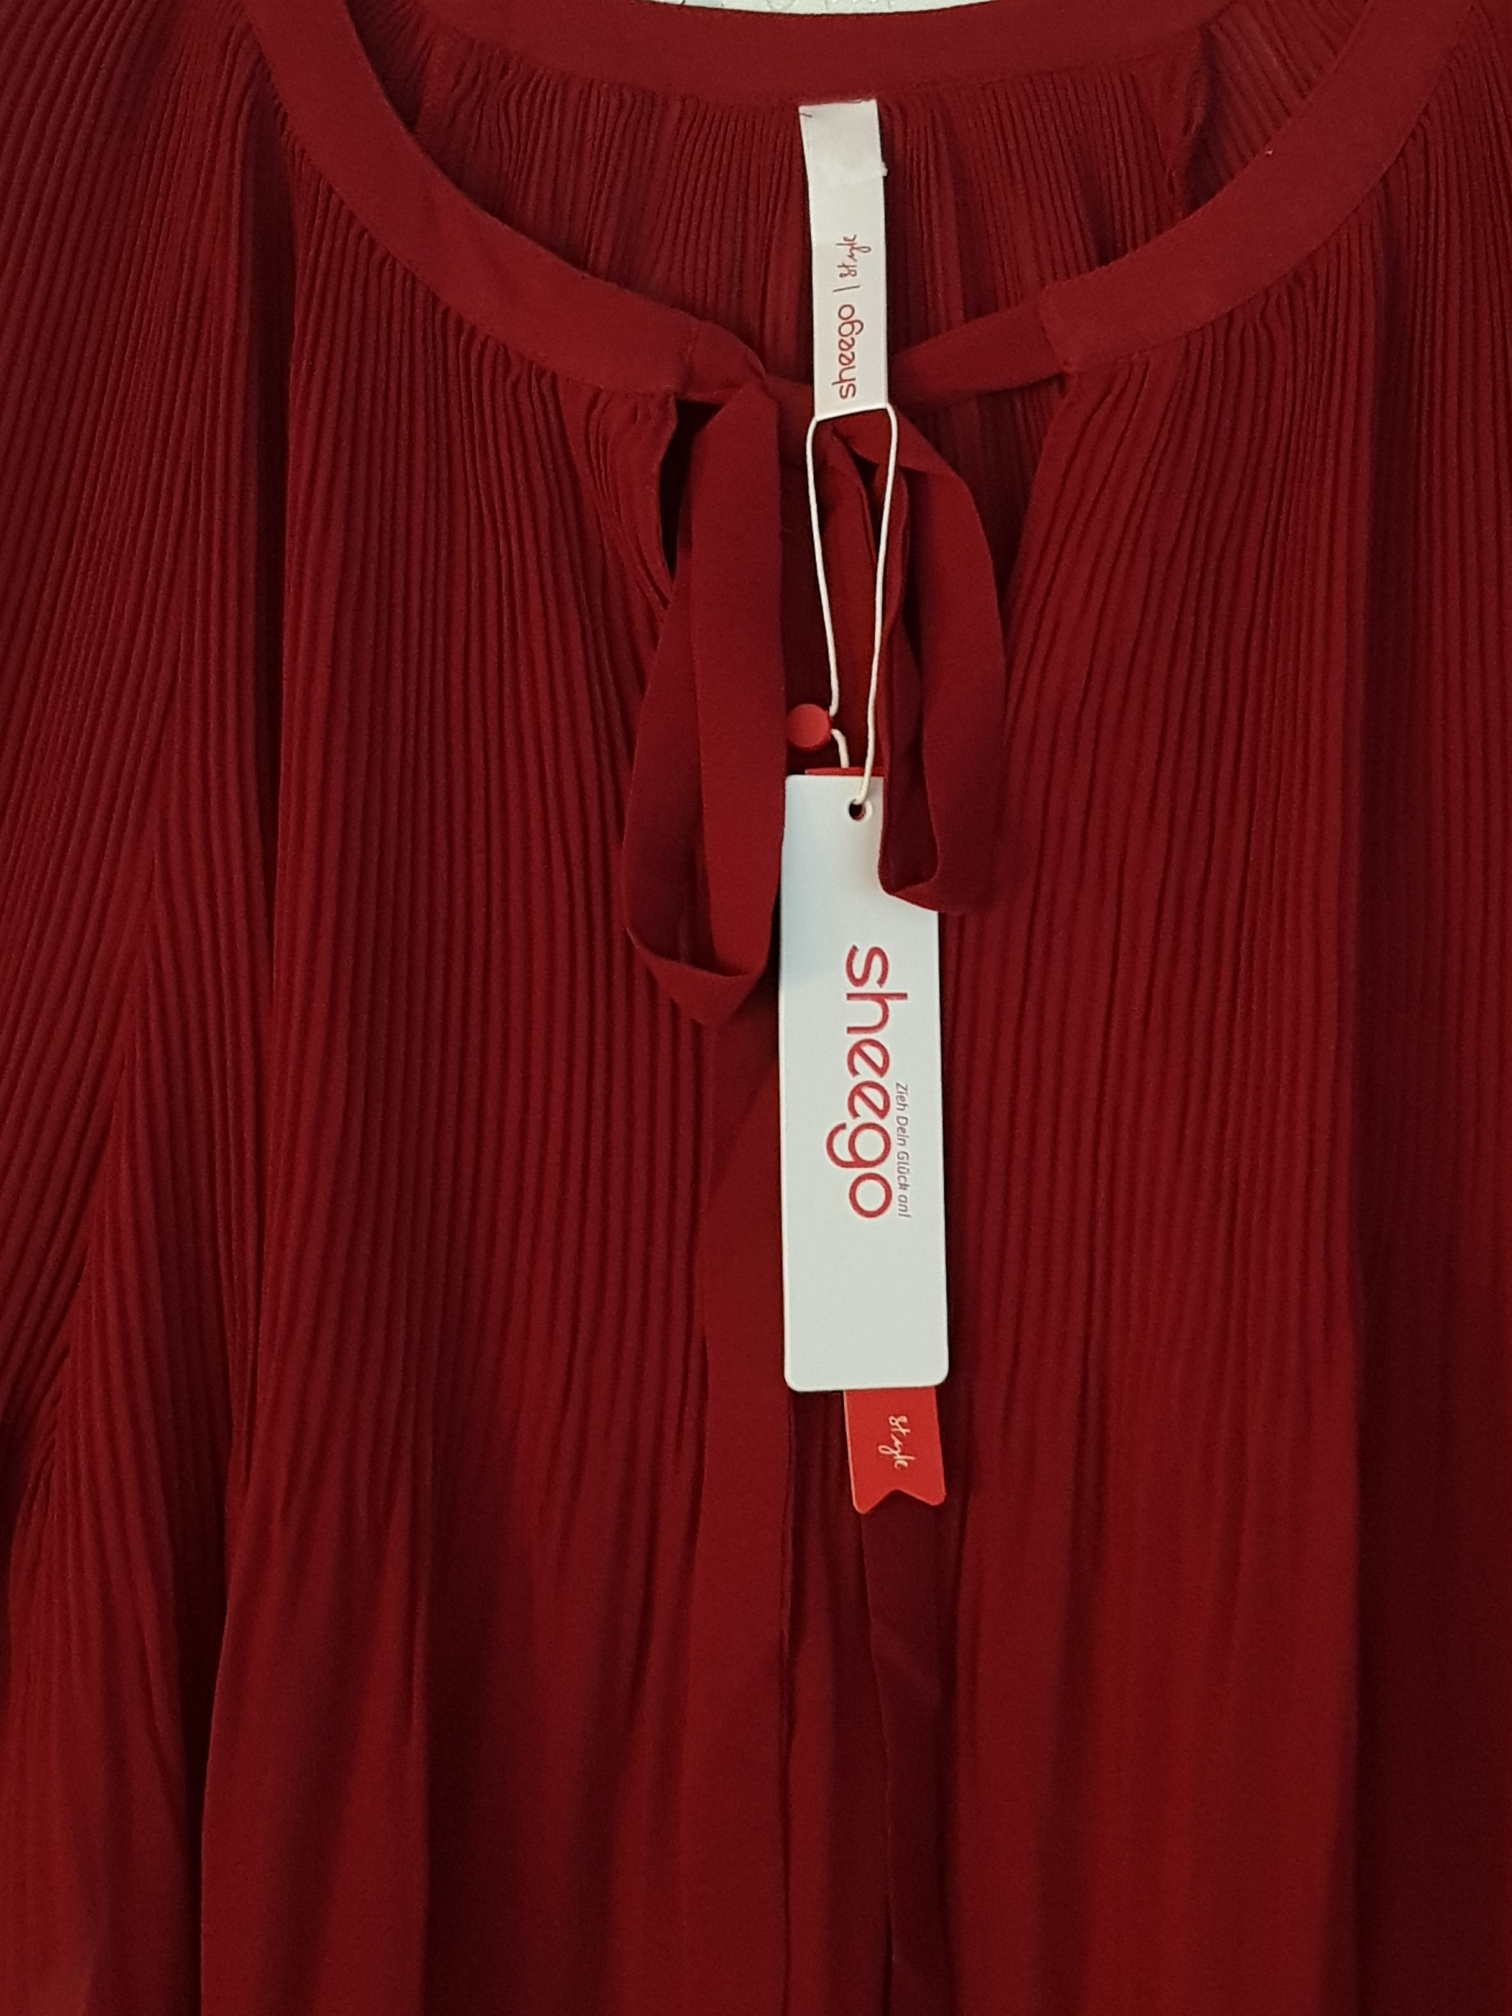 Sheego Damen Tunika Bluse rot halb transparent durchsichtig festlich 44 - 48